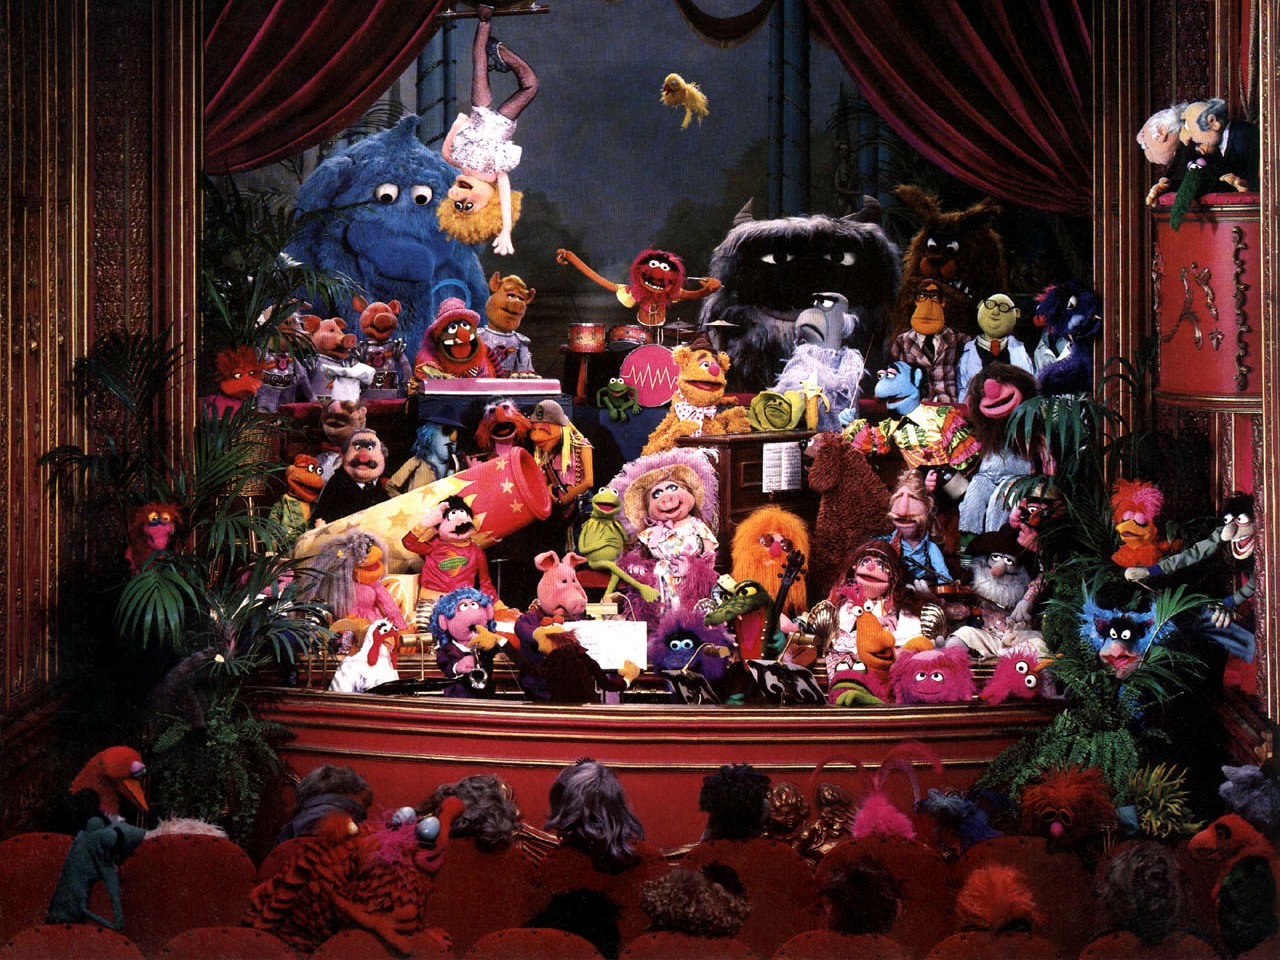 "The Muppet Show" desktop wallpaper (1280 x 960 pixels)